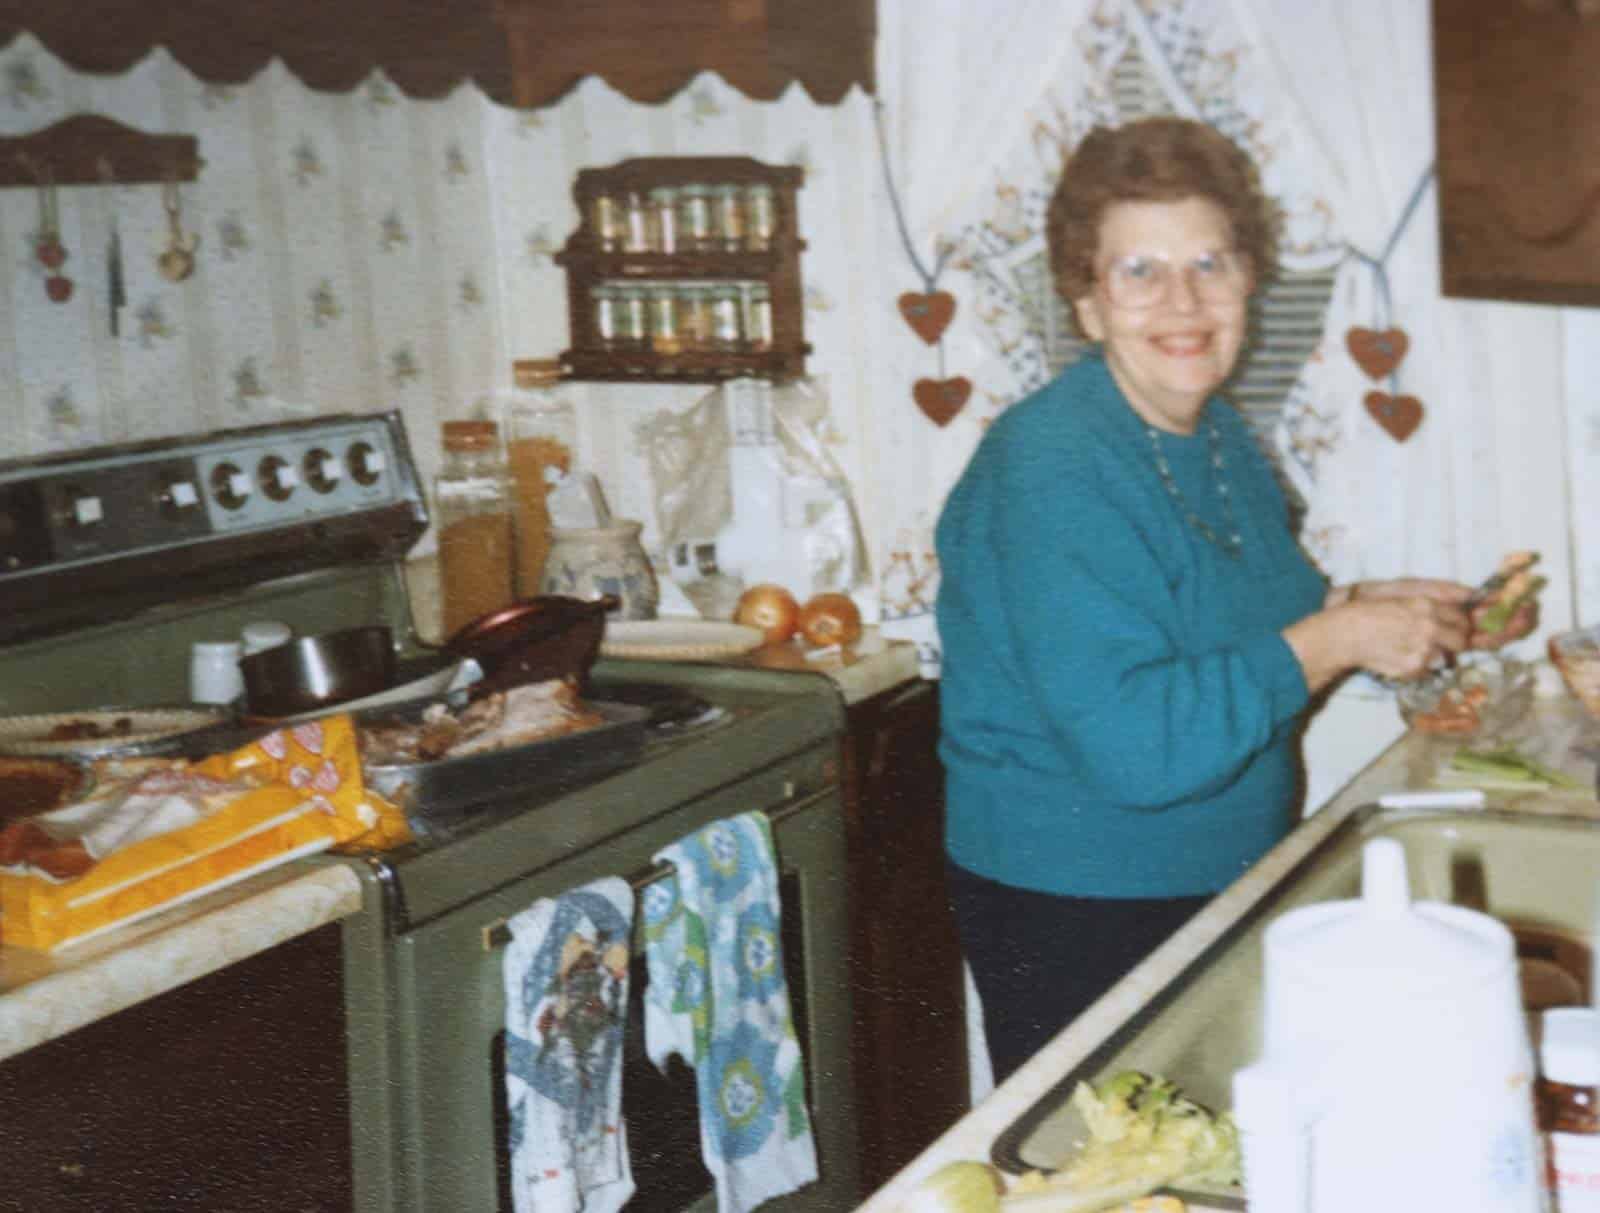 Granny in her tiny kitchen